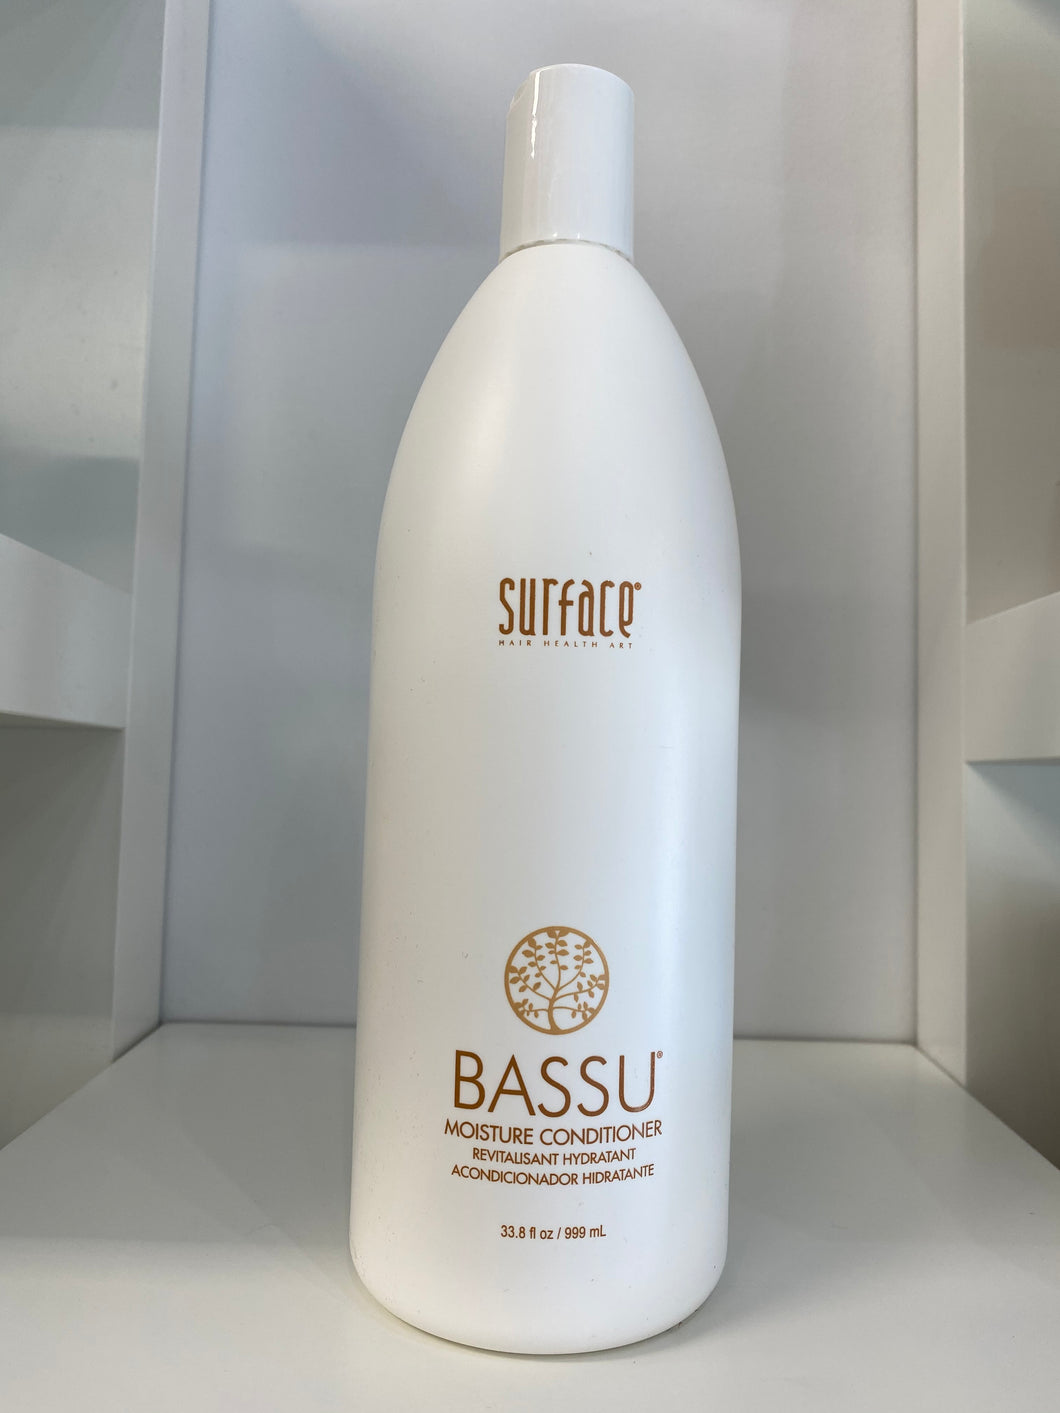 Bassu moisture conditioner litre